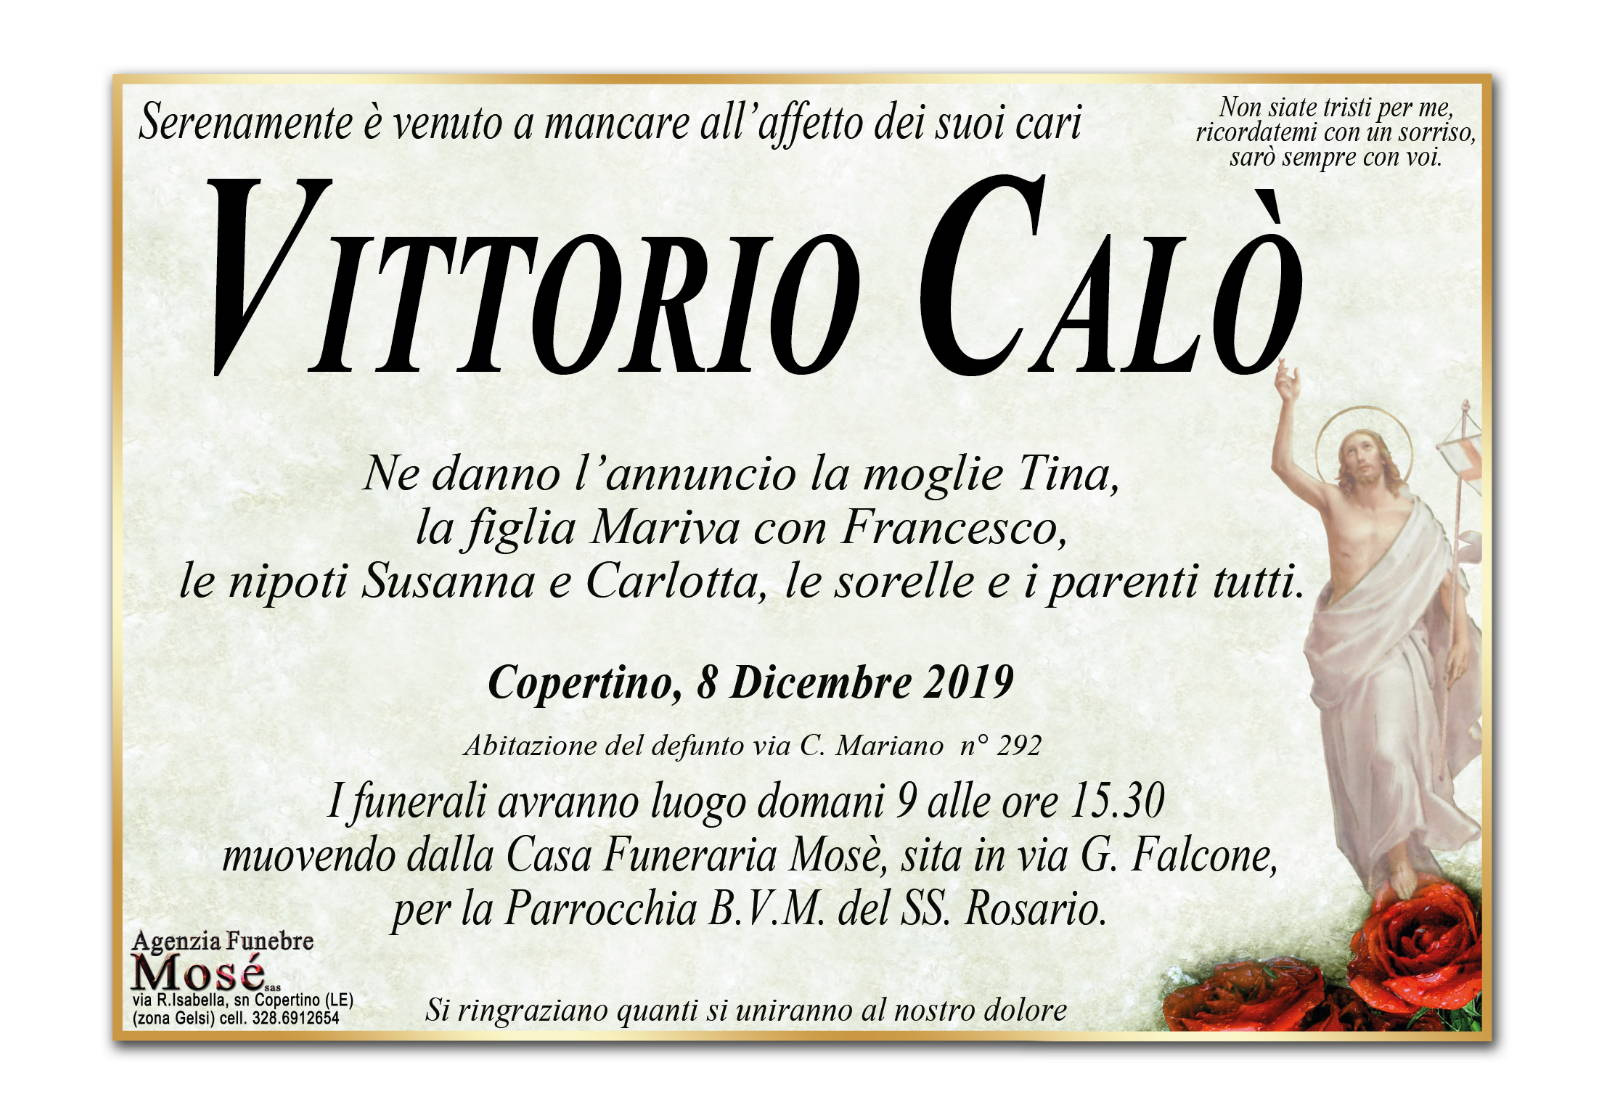 Vittorio Calò